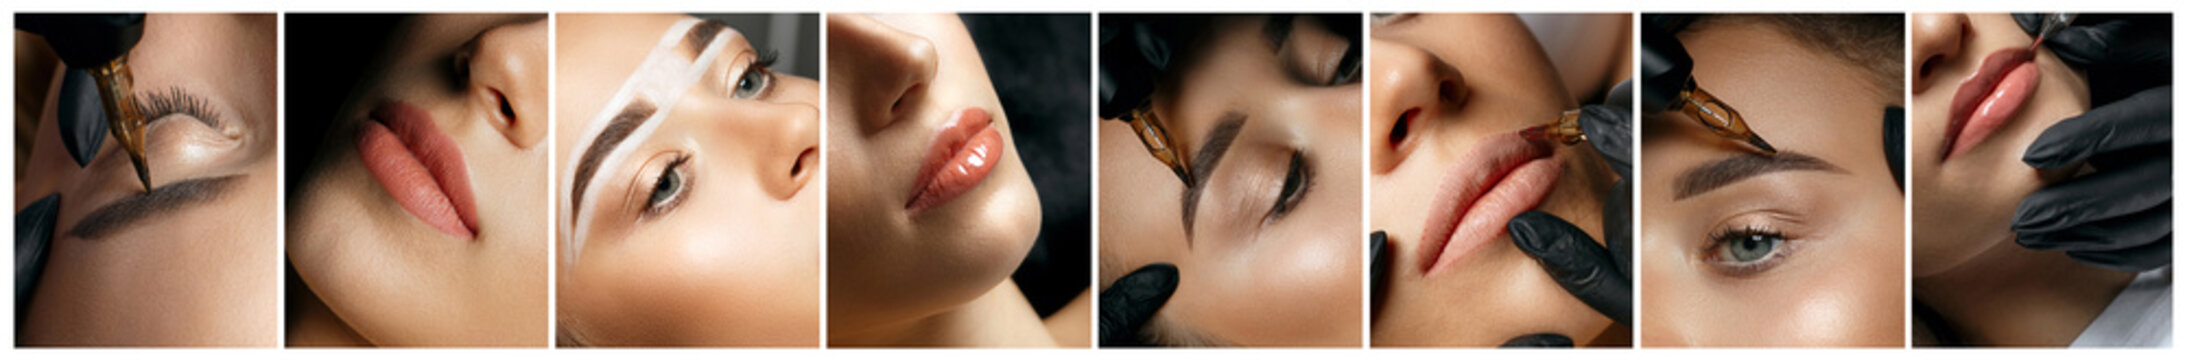 Set of permanent makeup photos: cosmetician applying permanent pigment